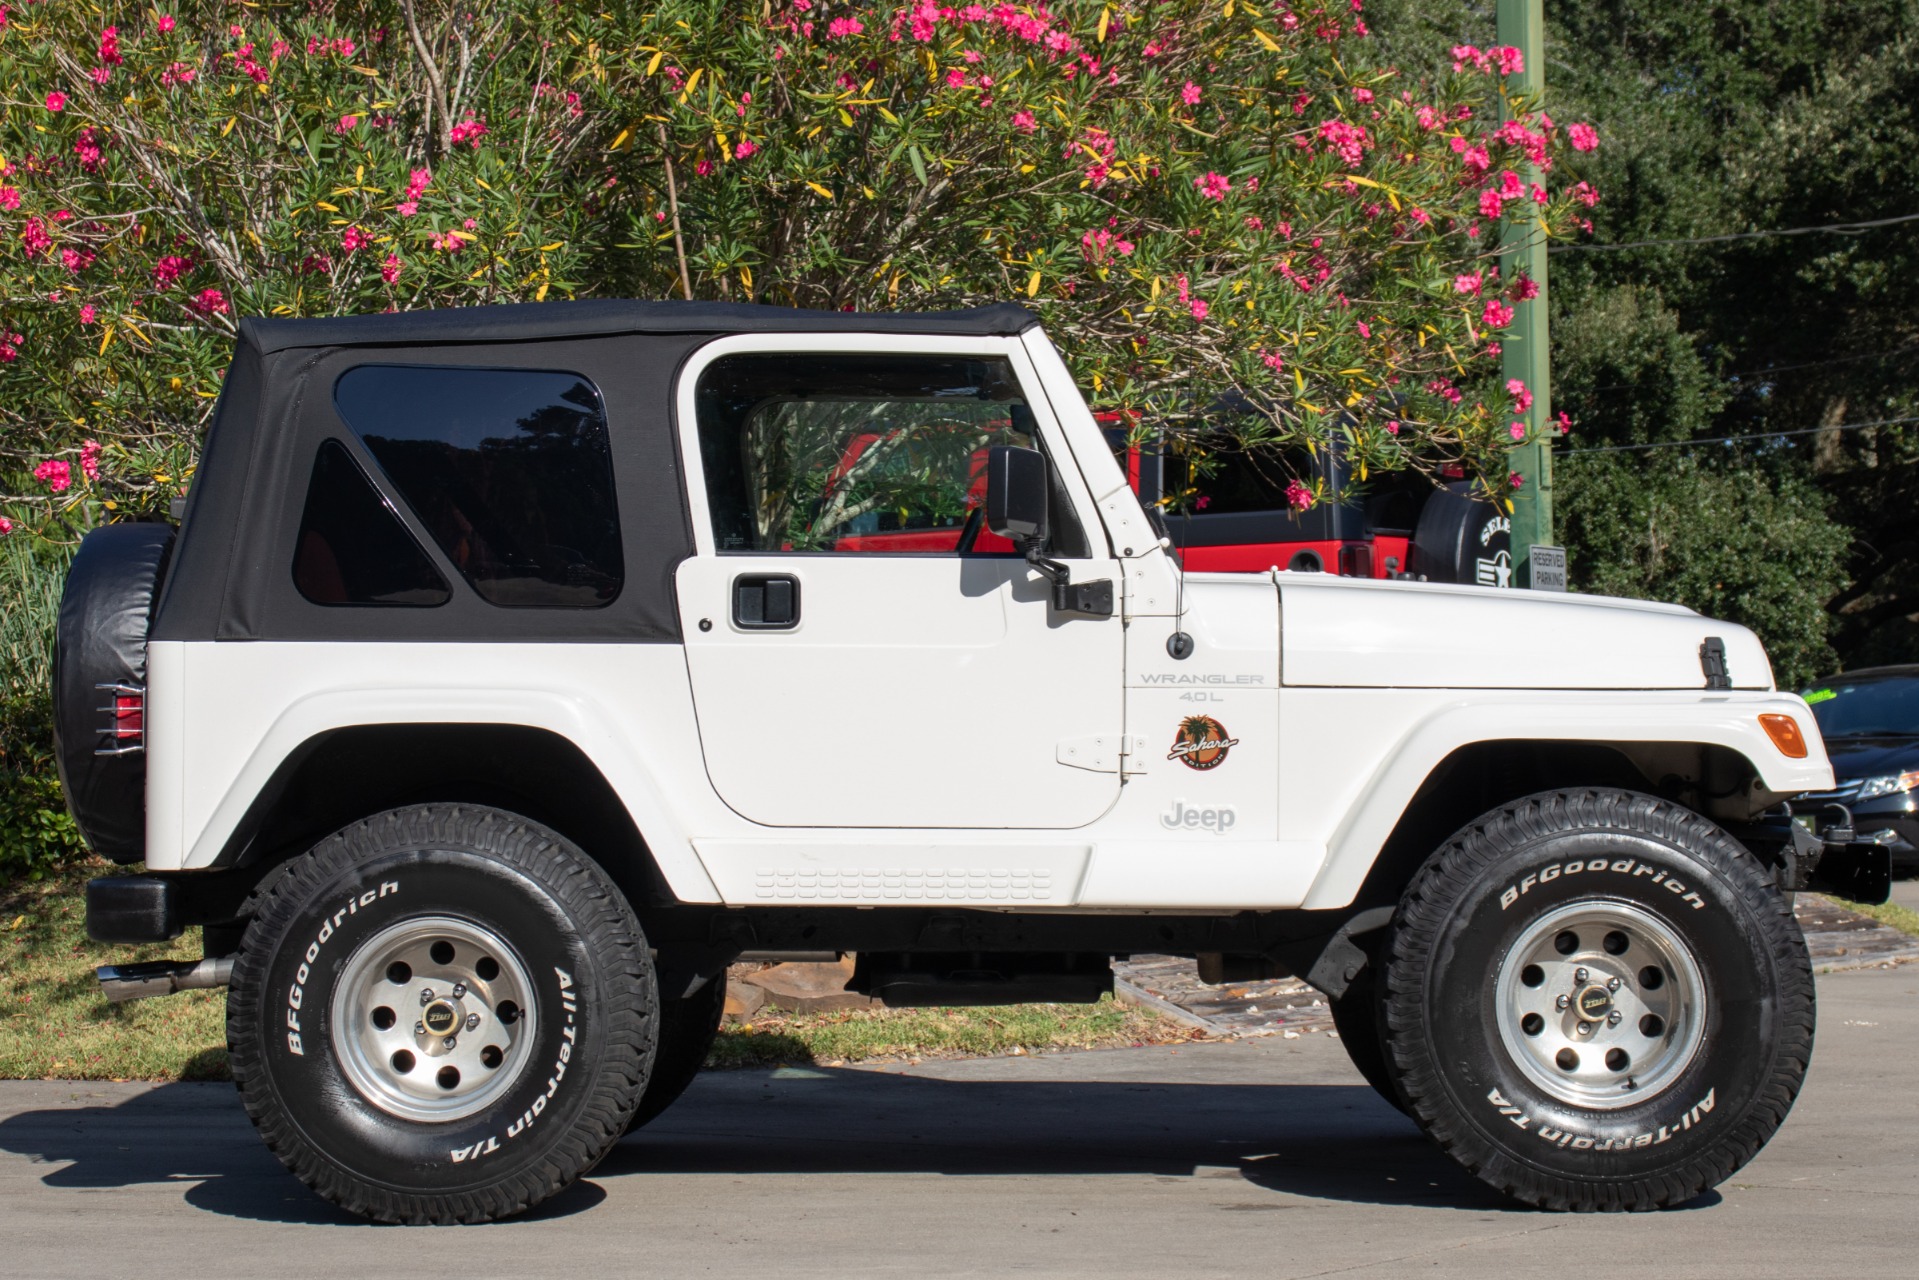 Used 1997 Jeep Wrangler Sahara For Sale ($12,995) | Select Jeeps Inc. Stock  #520687